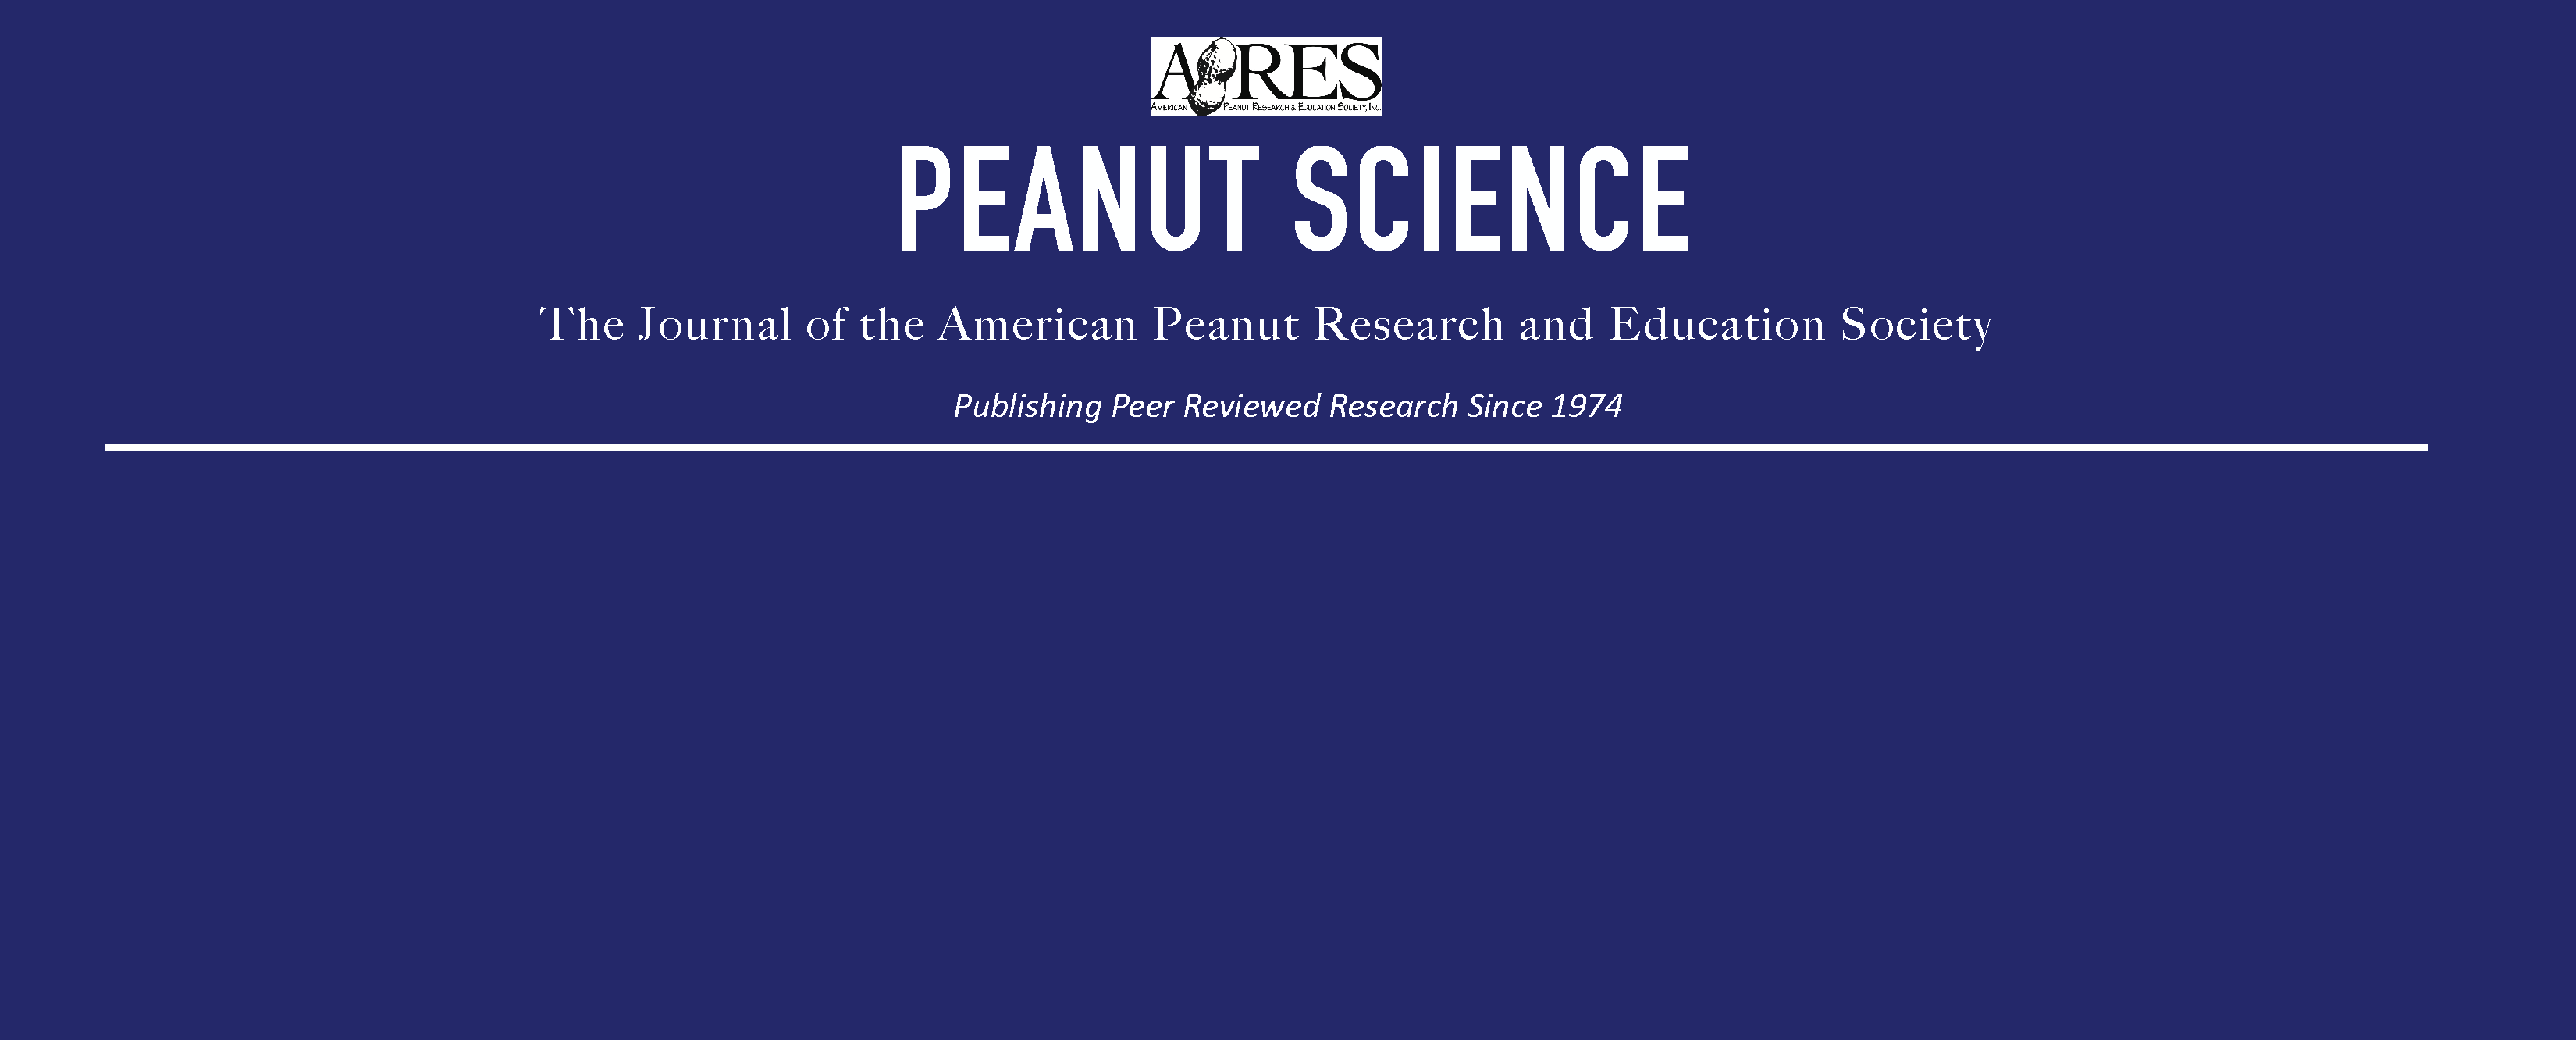 Alternate Tillage Practices for Peanut Production in Virginia